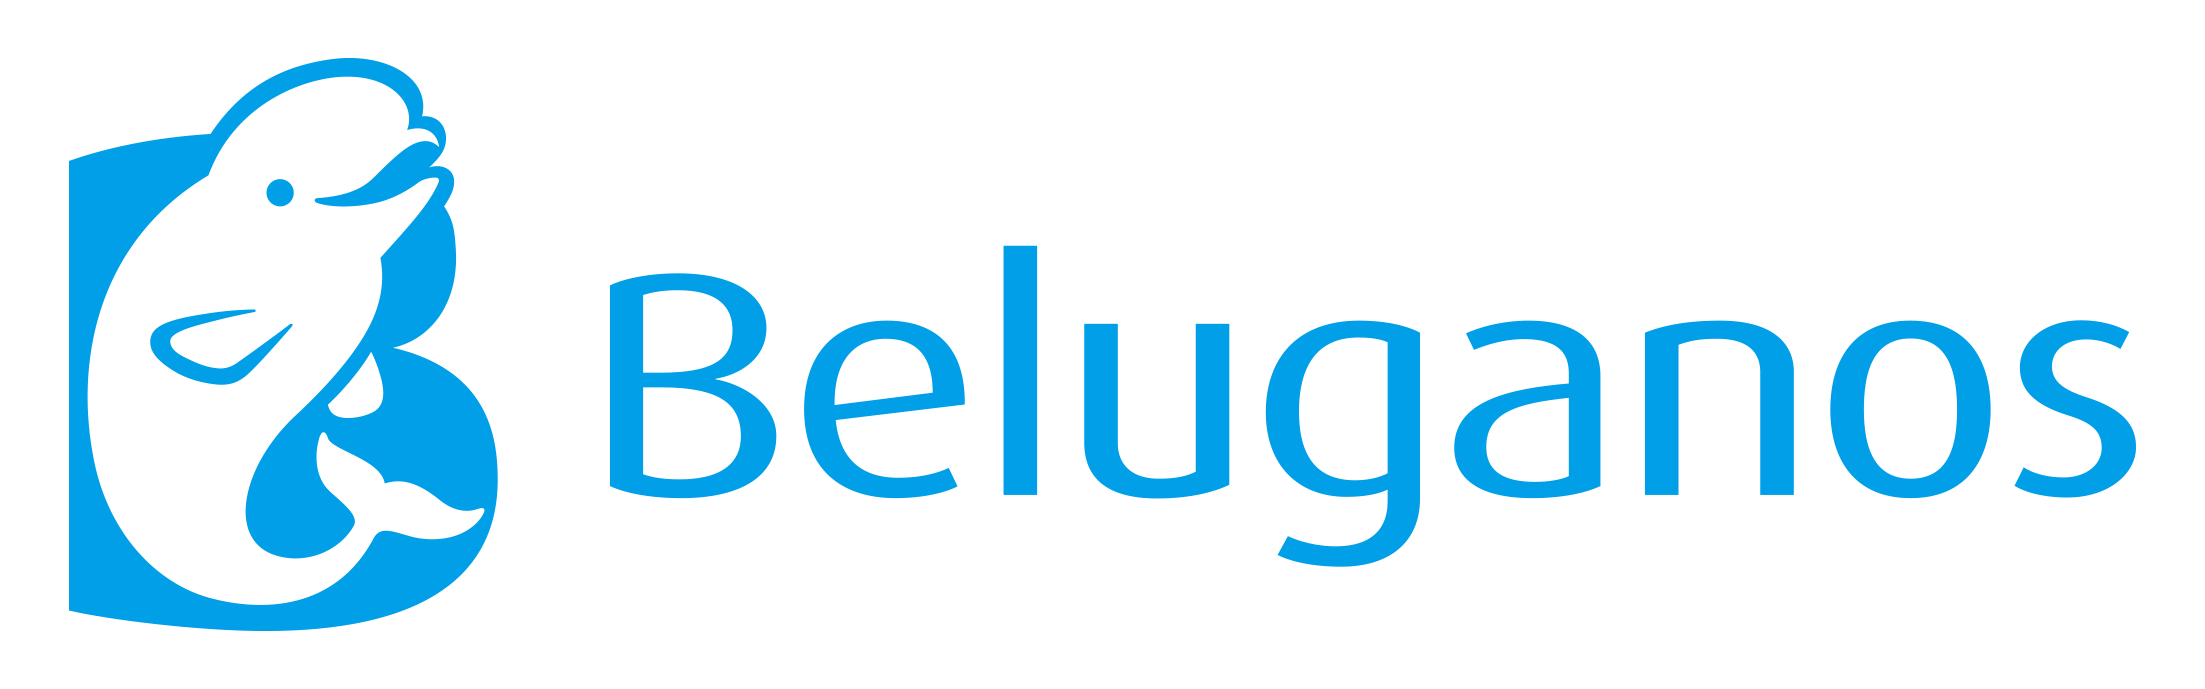 beluganos-logomark